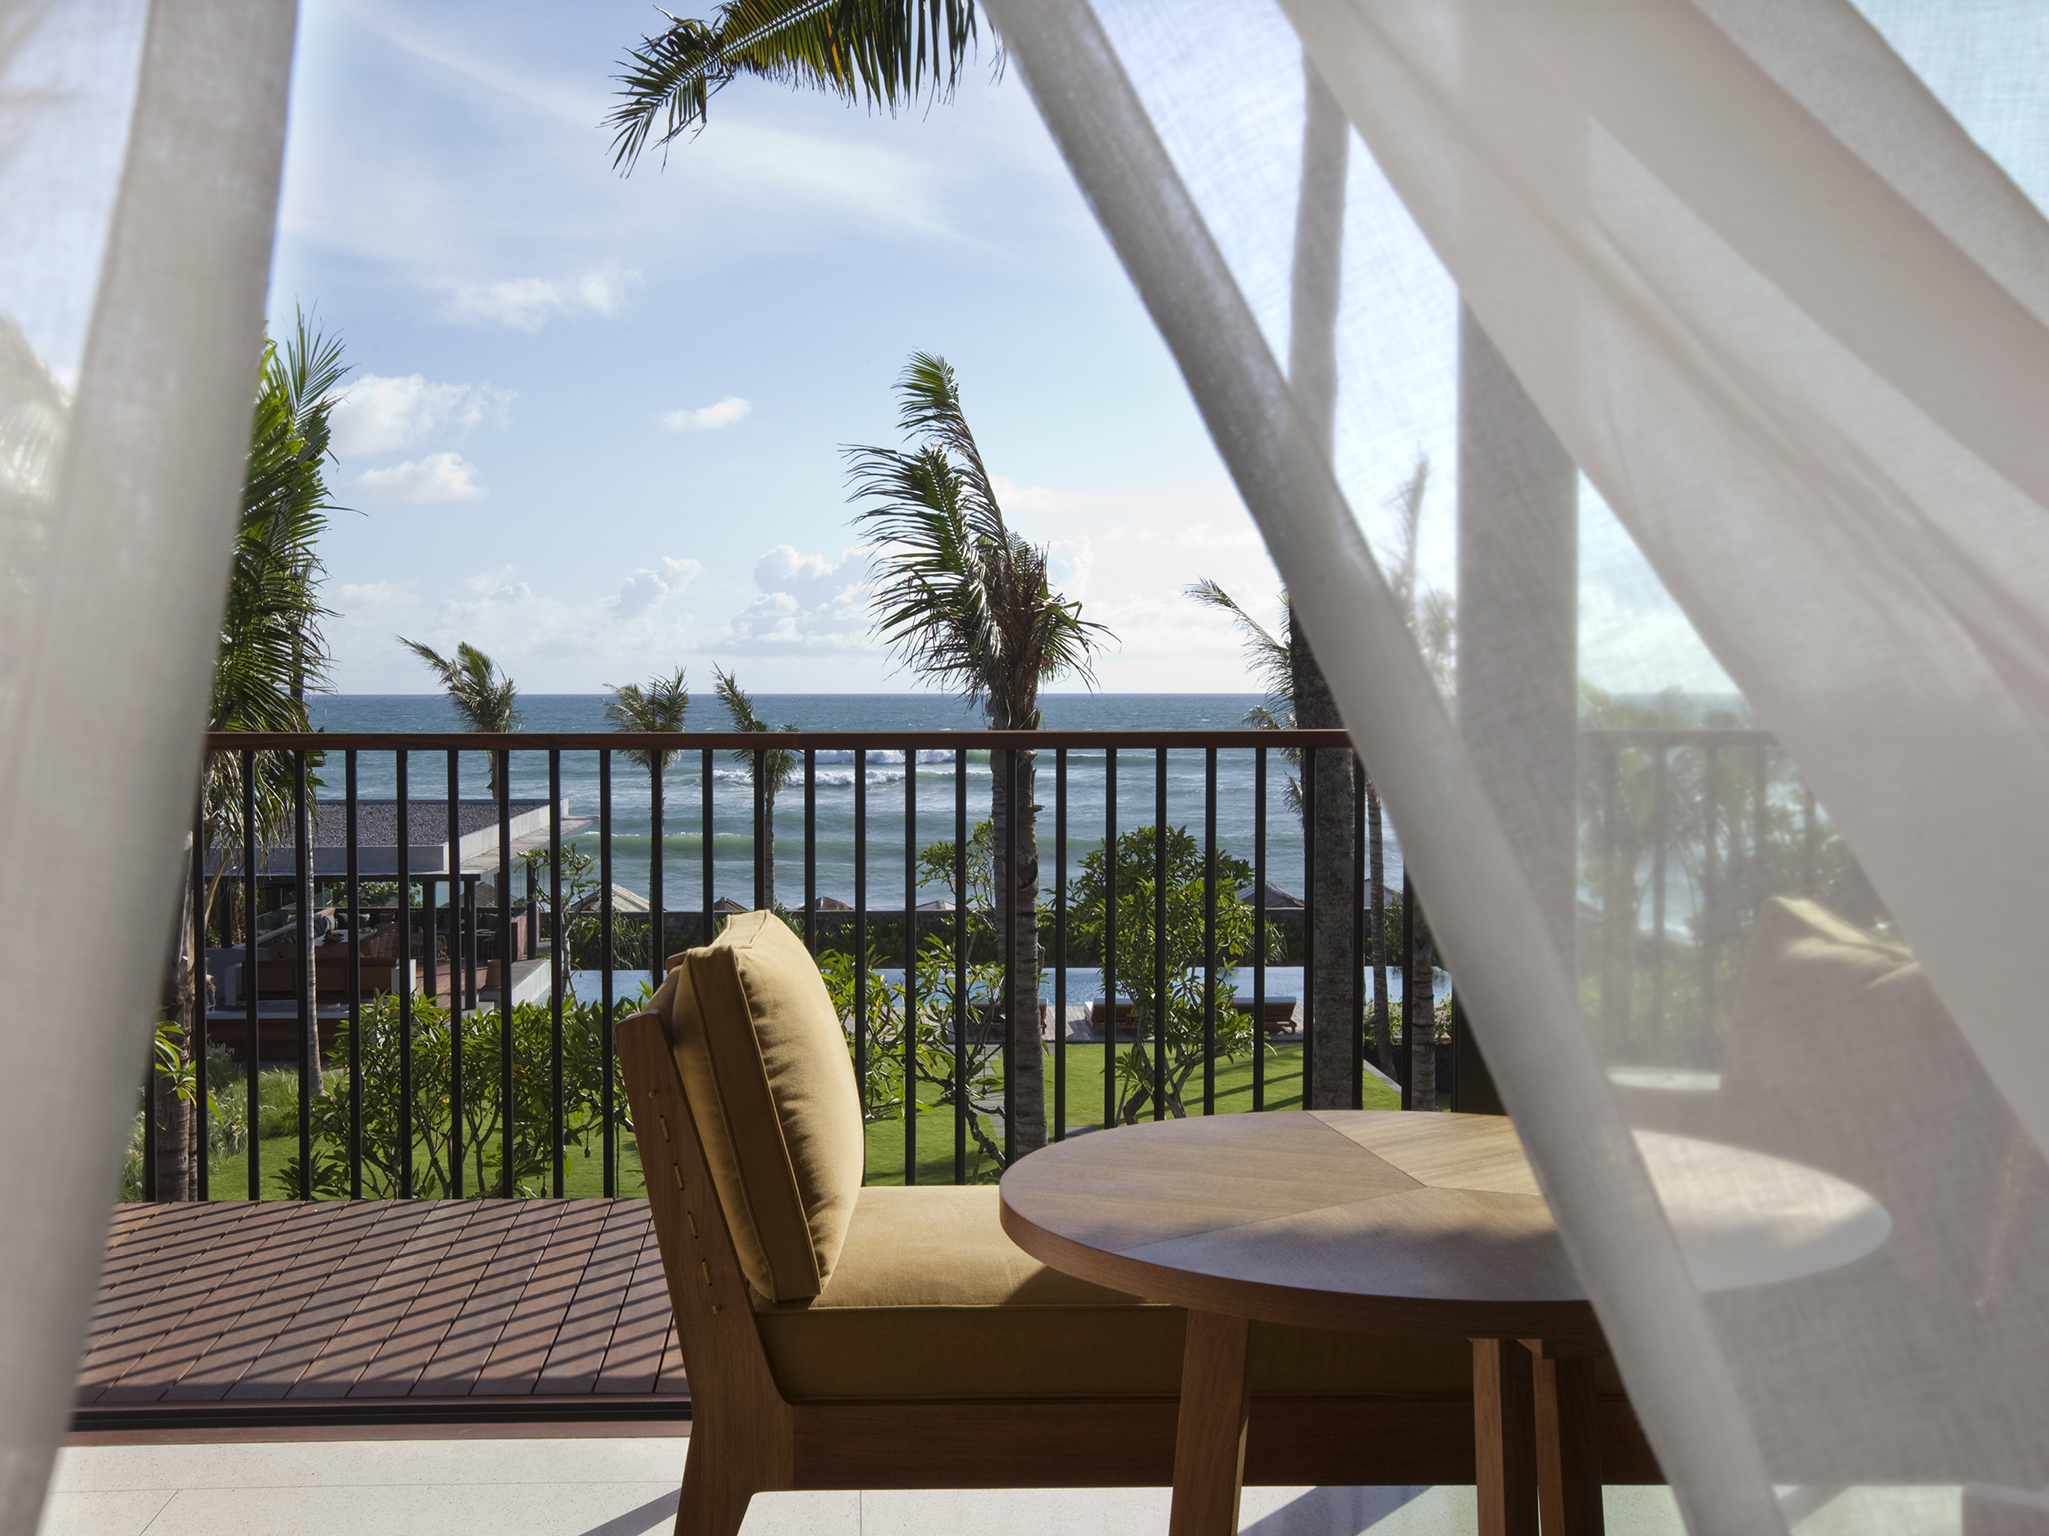 Arnalaya Beach House - Master bedroom terrace - Arnalaya Beach House, Canggu, Bali